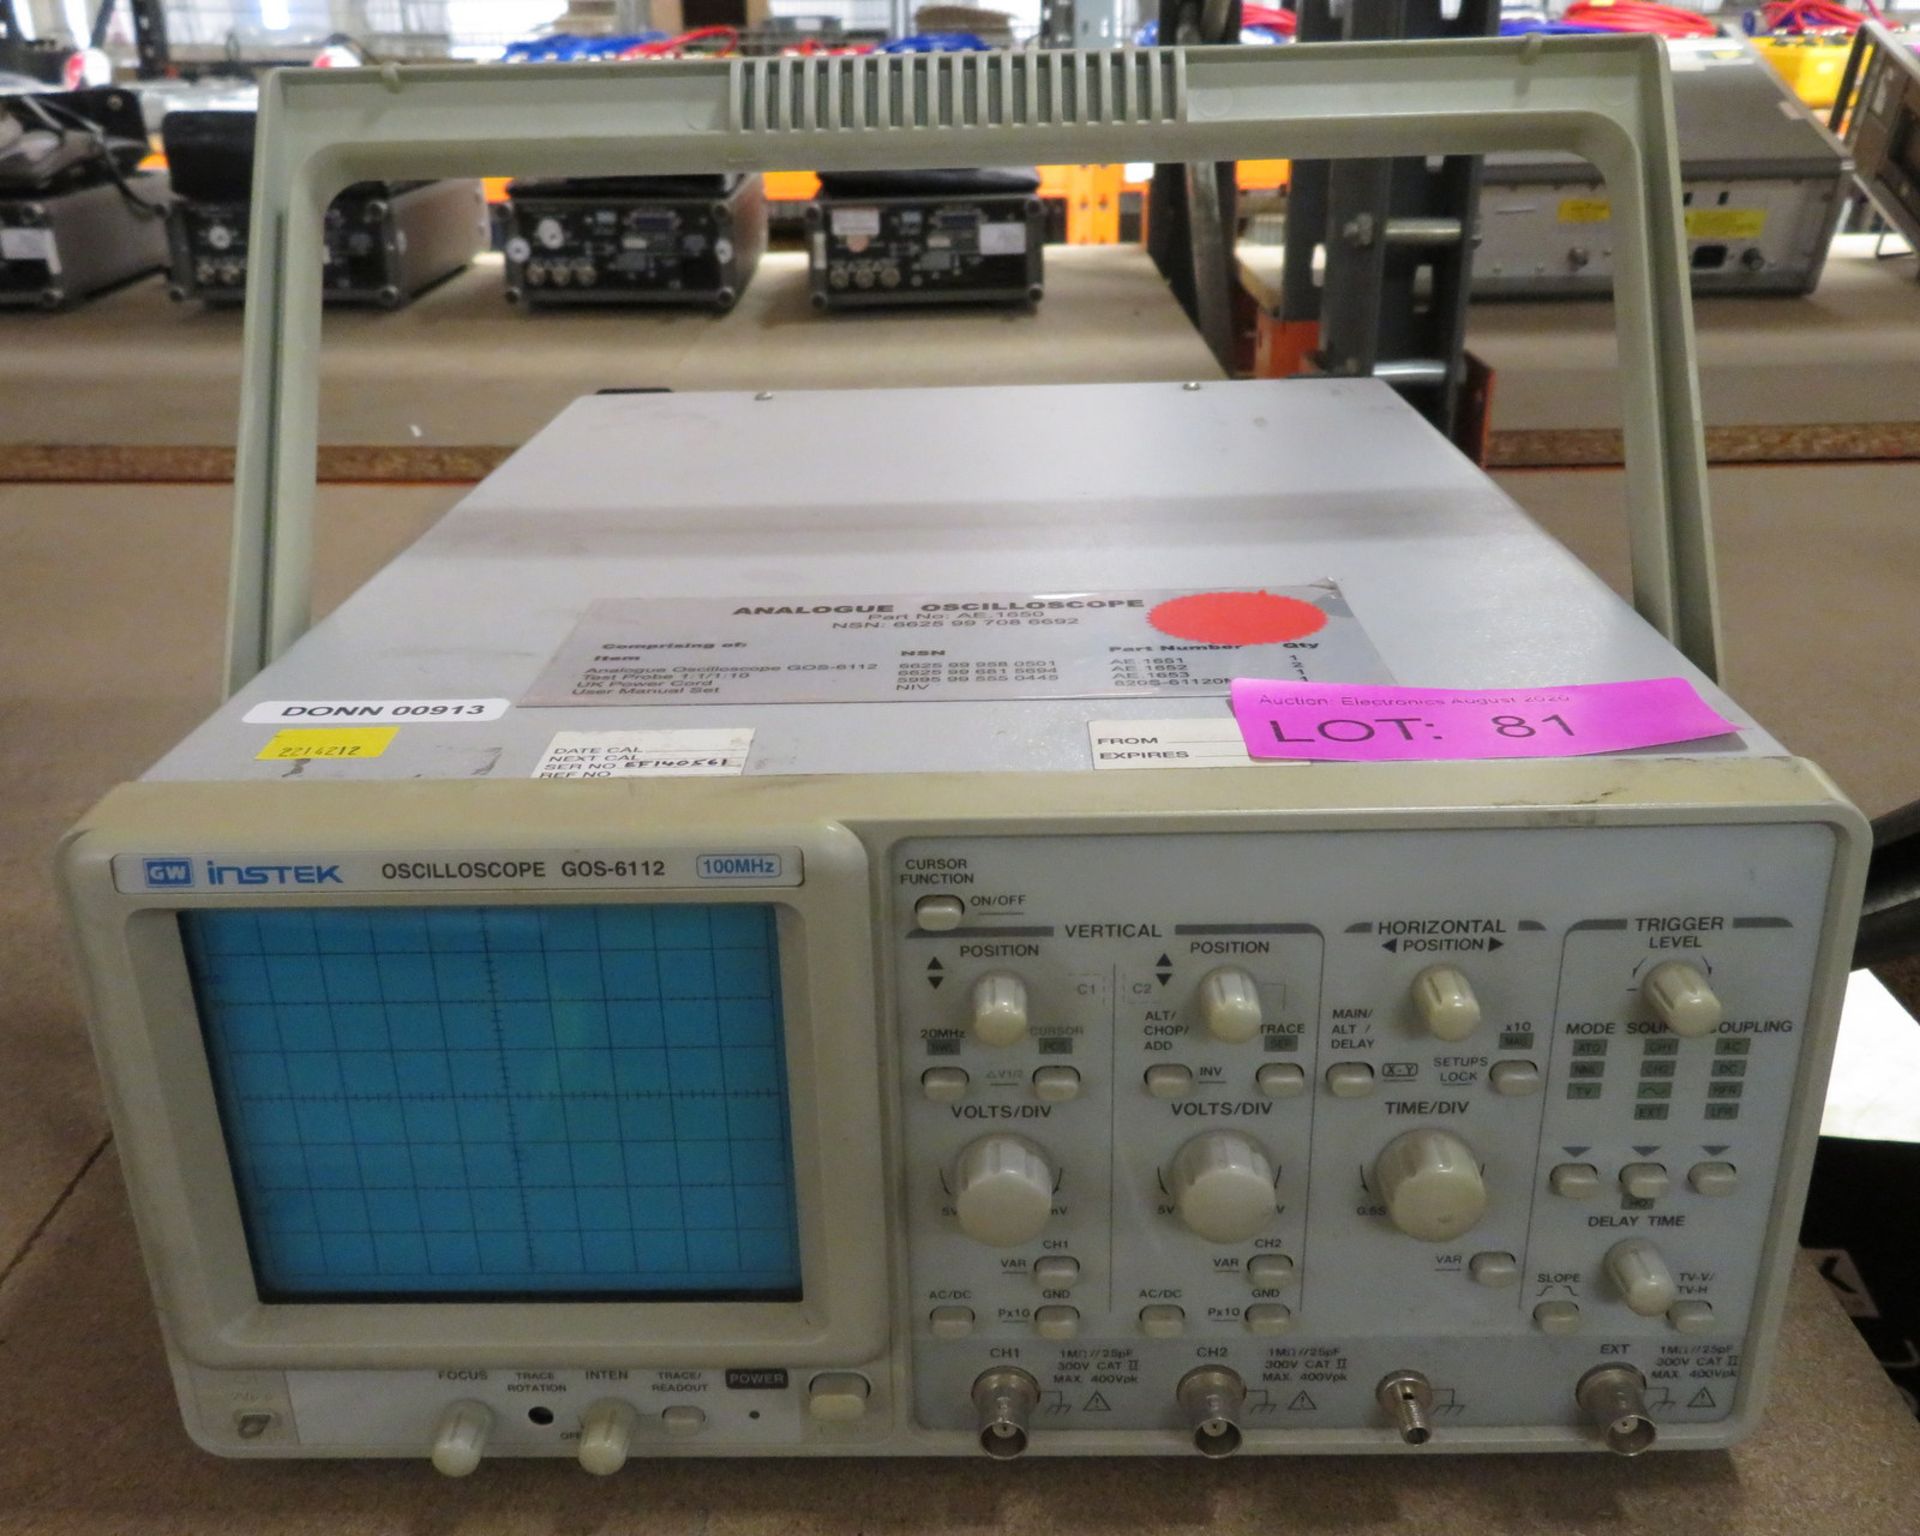 GW Instek oscilloscope GOS-6112 100MHz